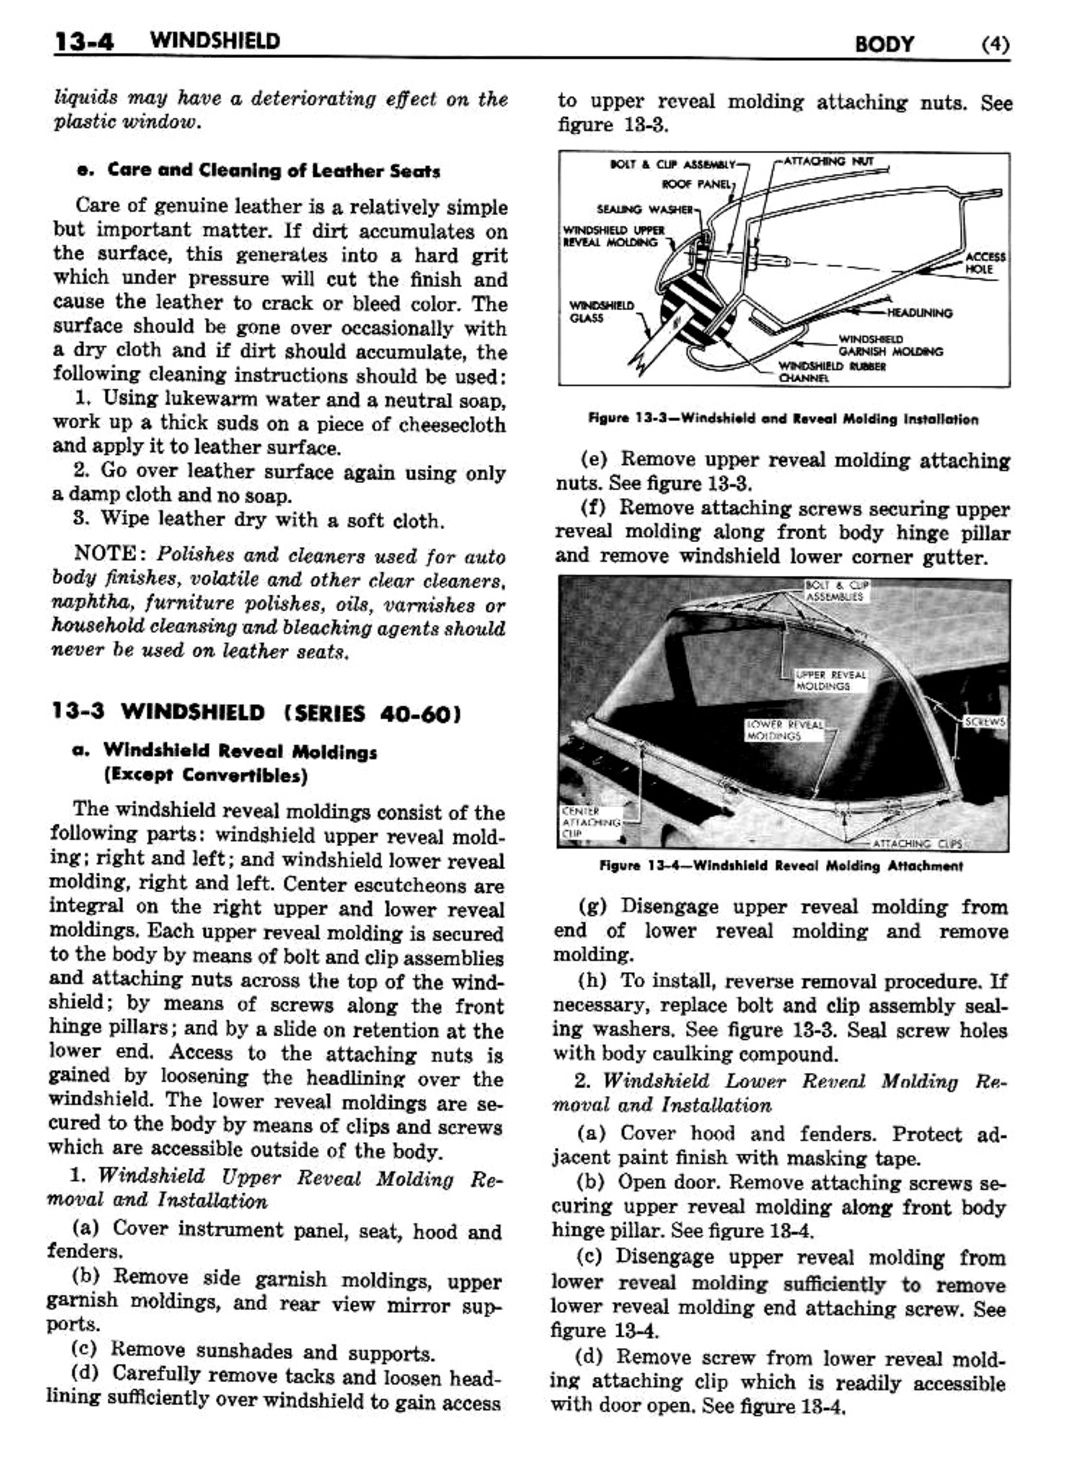 n_1957 Buick Body Service Manual-006-006.jpg